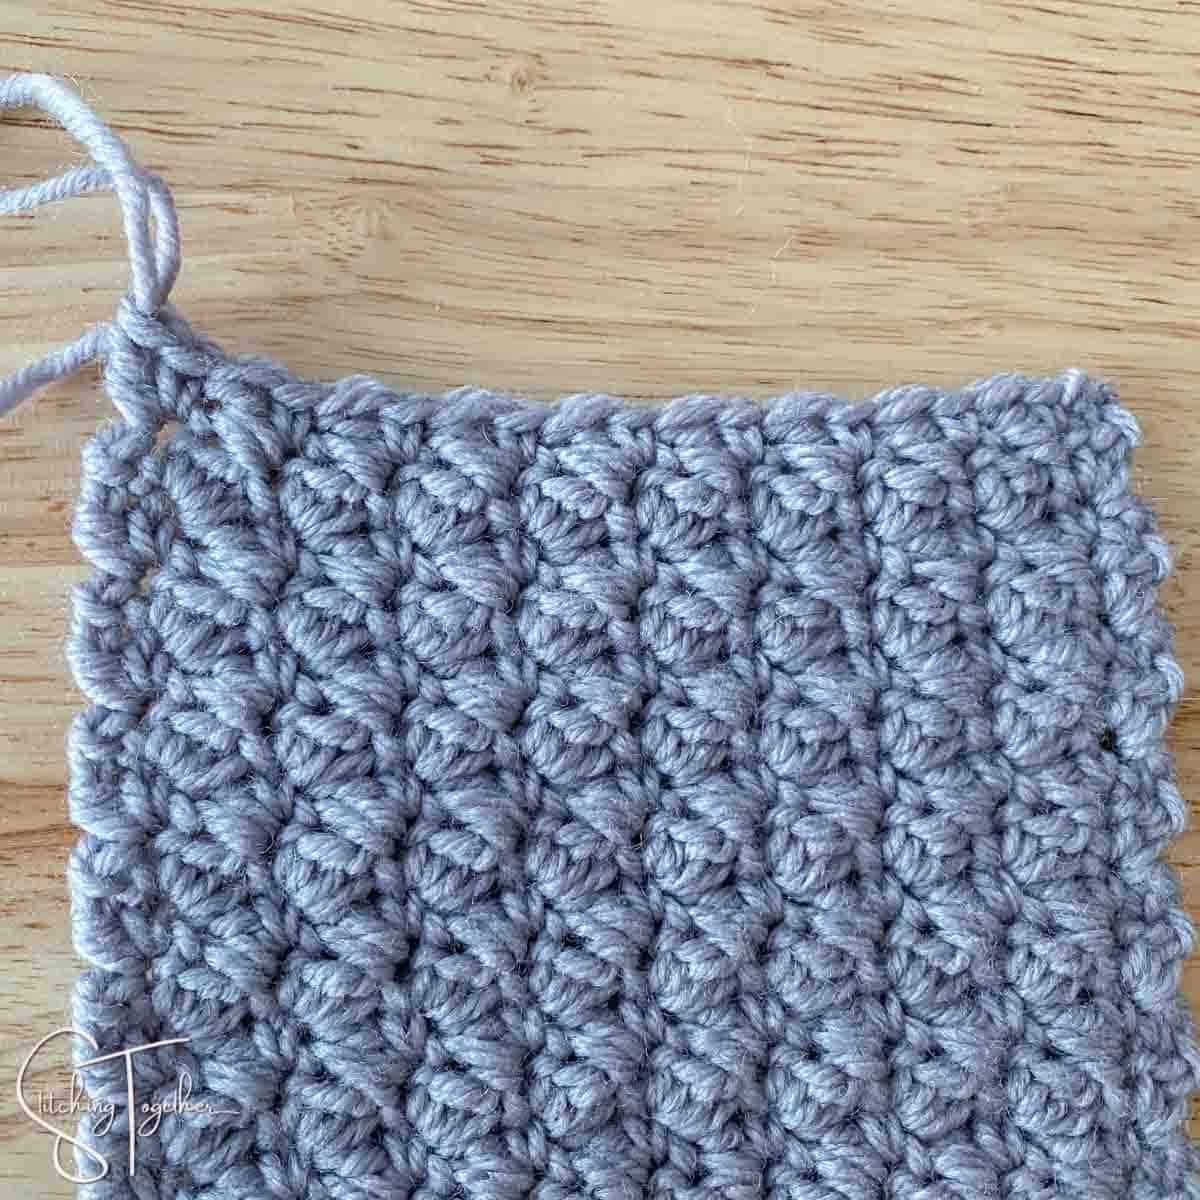 finished swatch of crochet suzette stitch